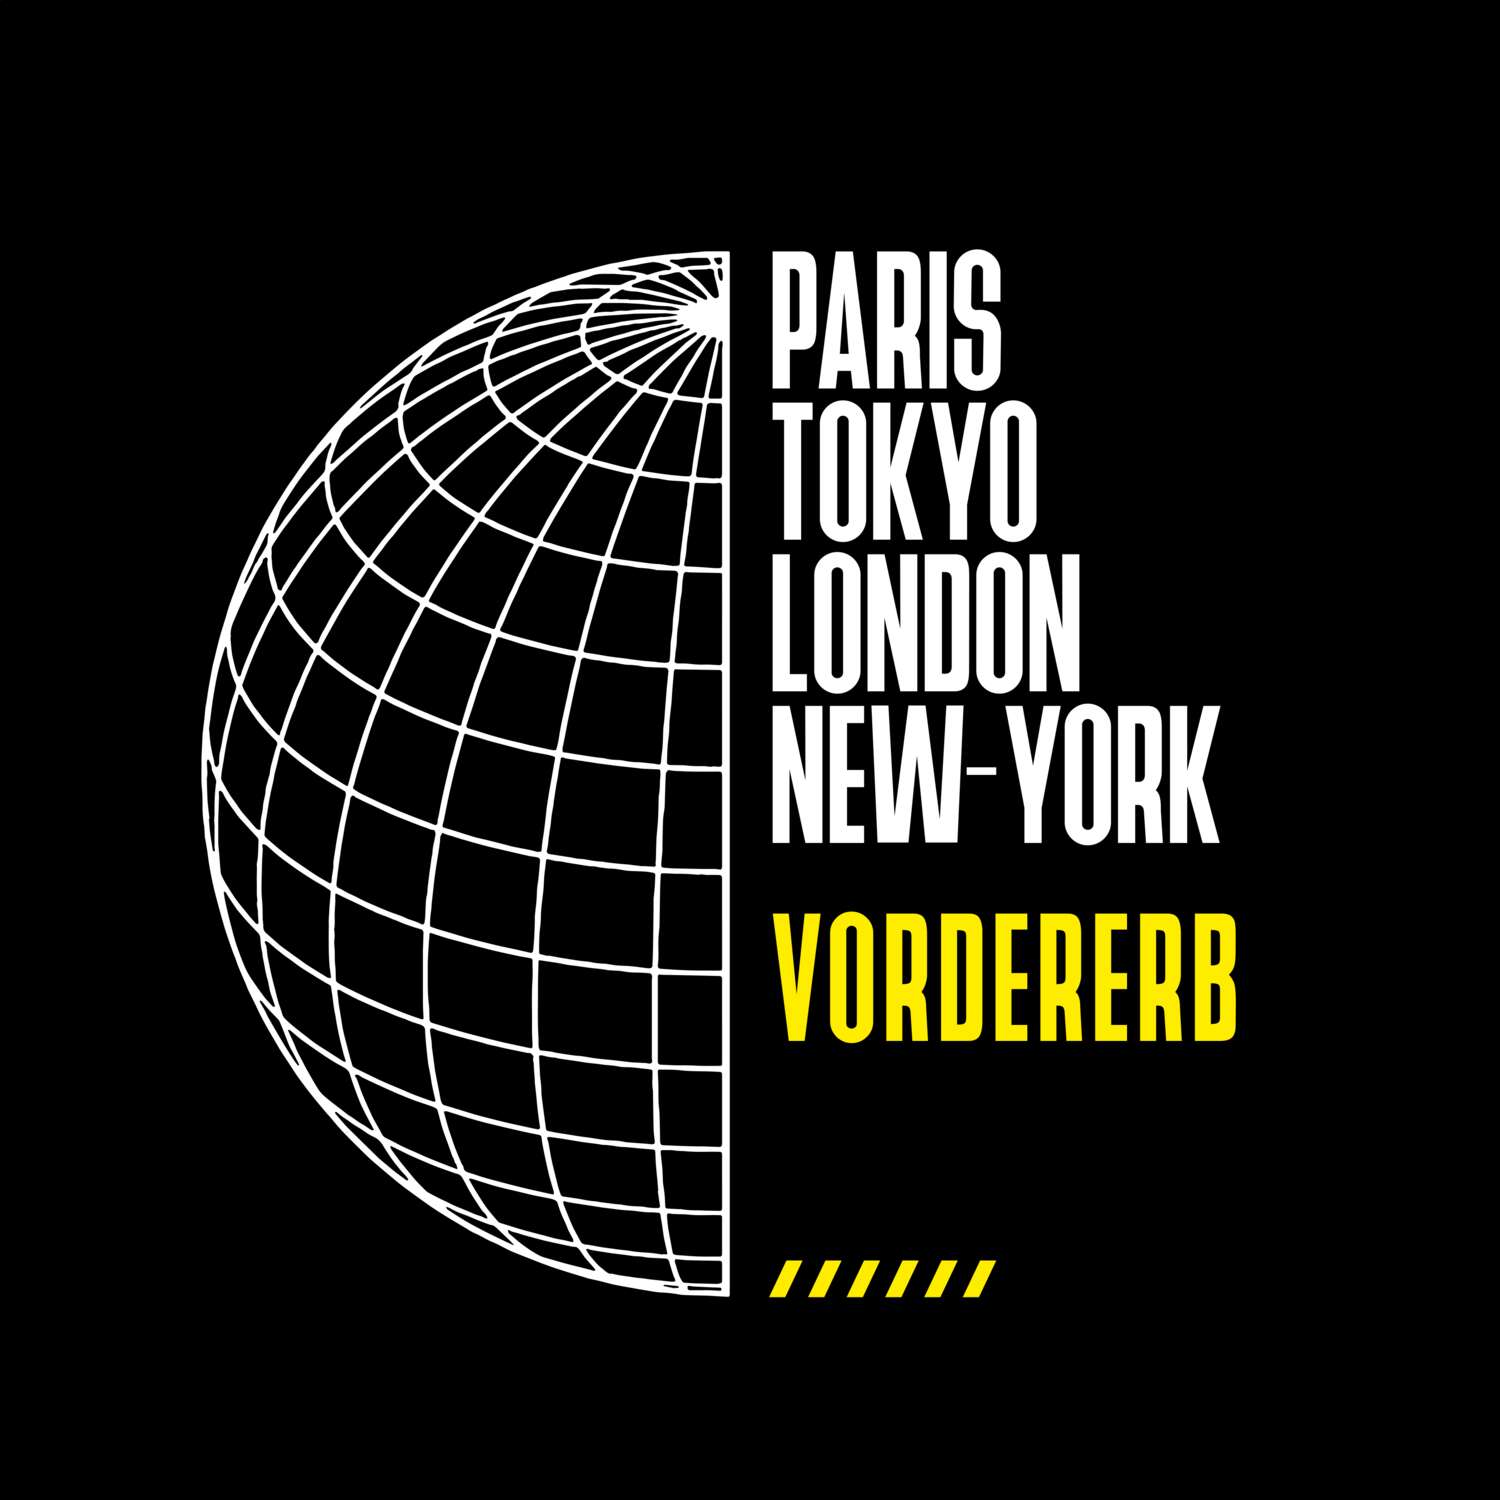 Vordererb T-Shirt »Paris Tokyo London«